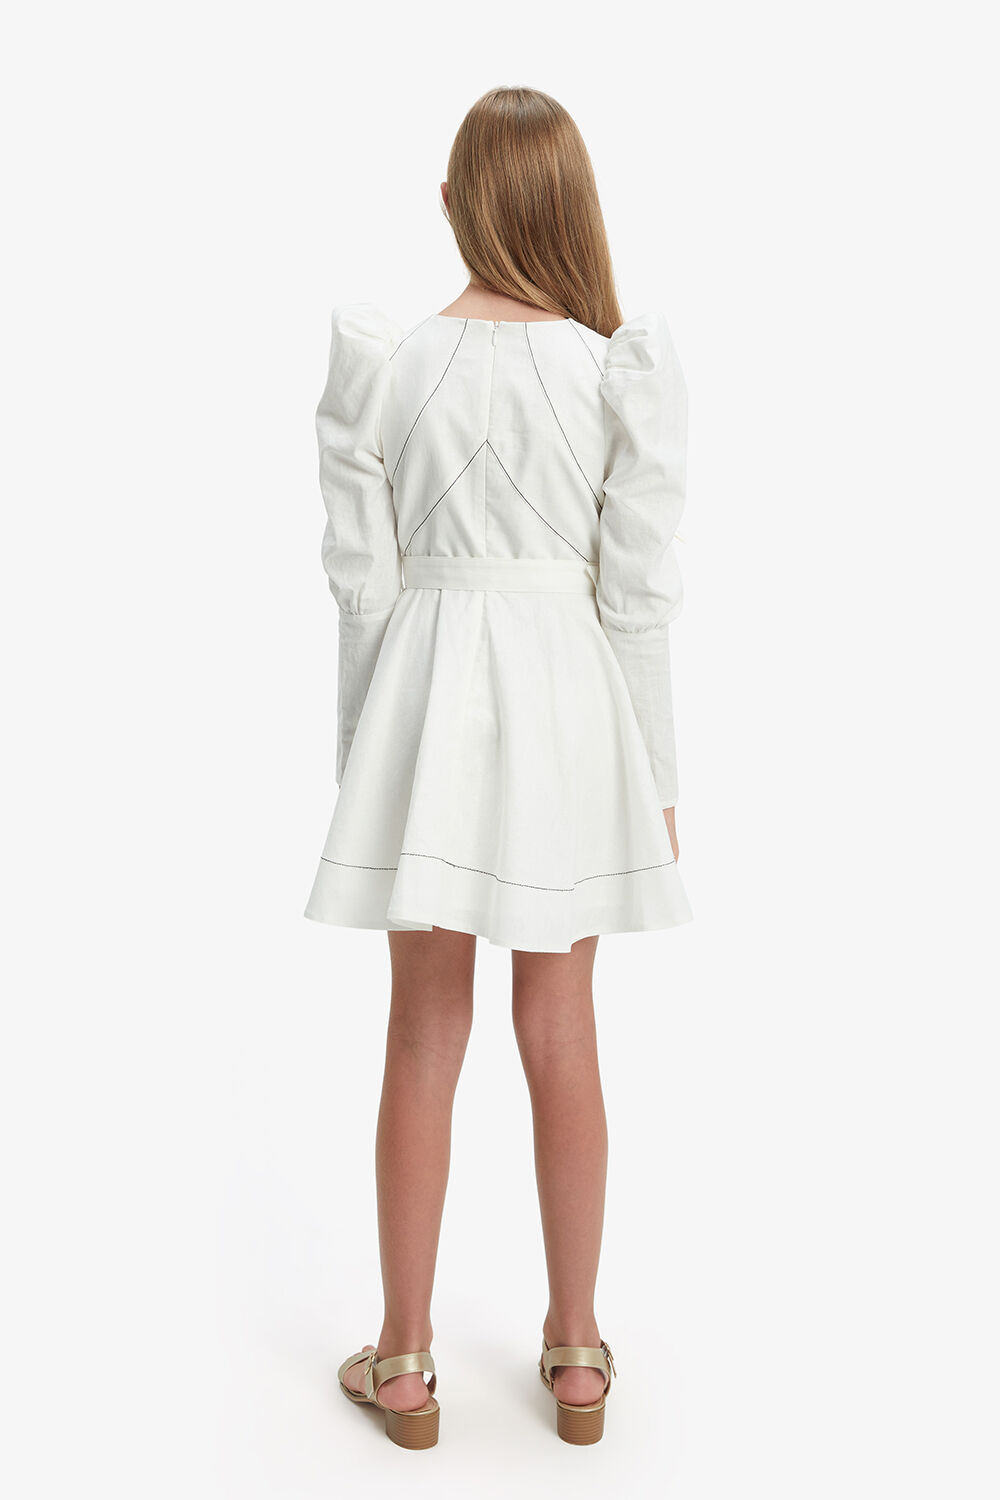 ZETA PUFF SLEEVE DRESS in colour BRIGHT WHITE